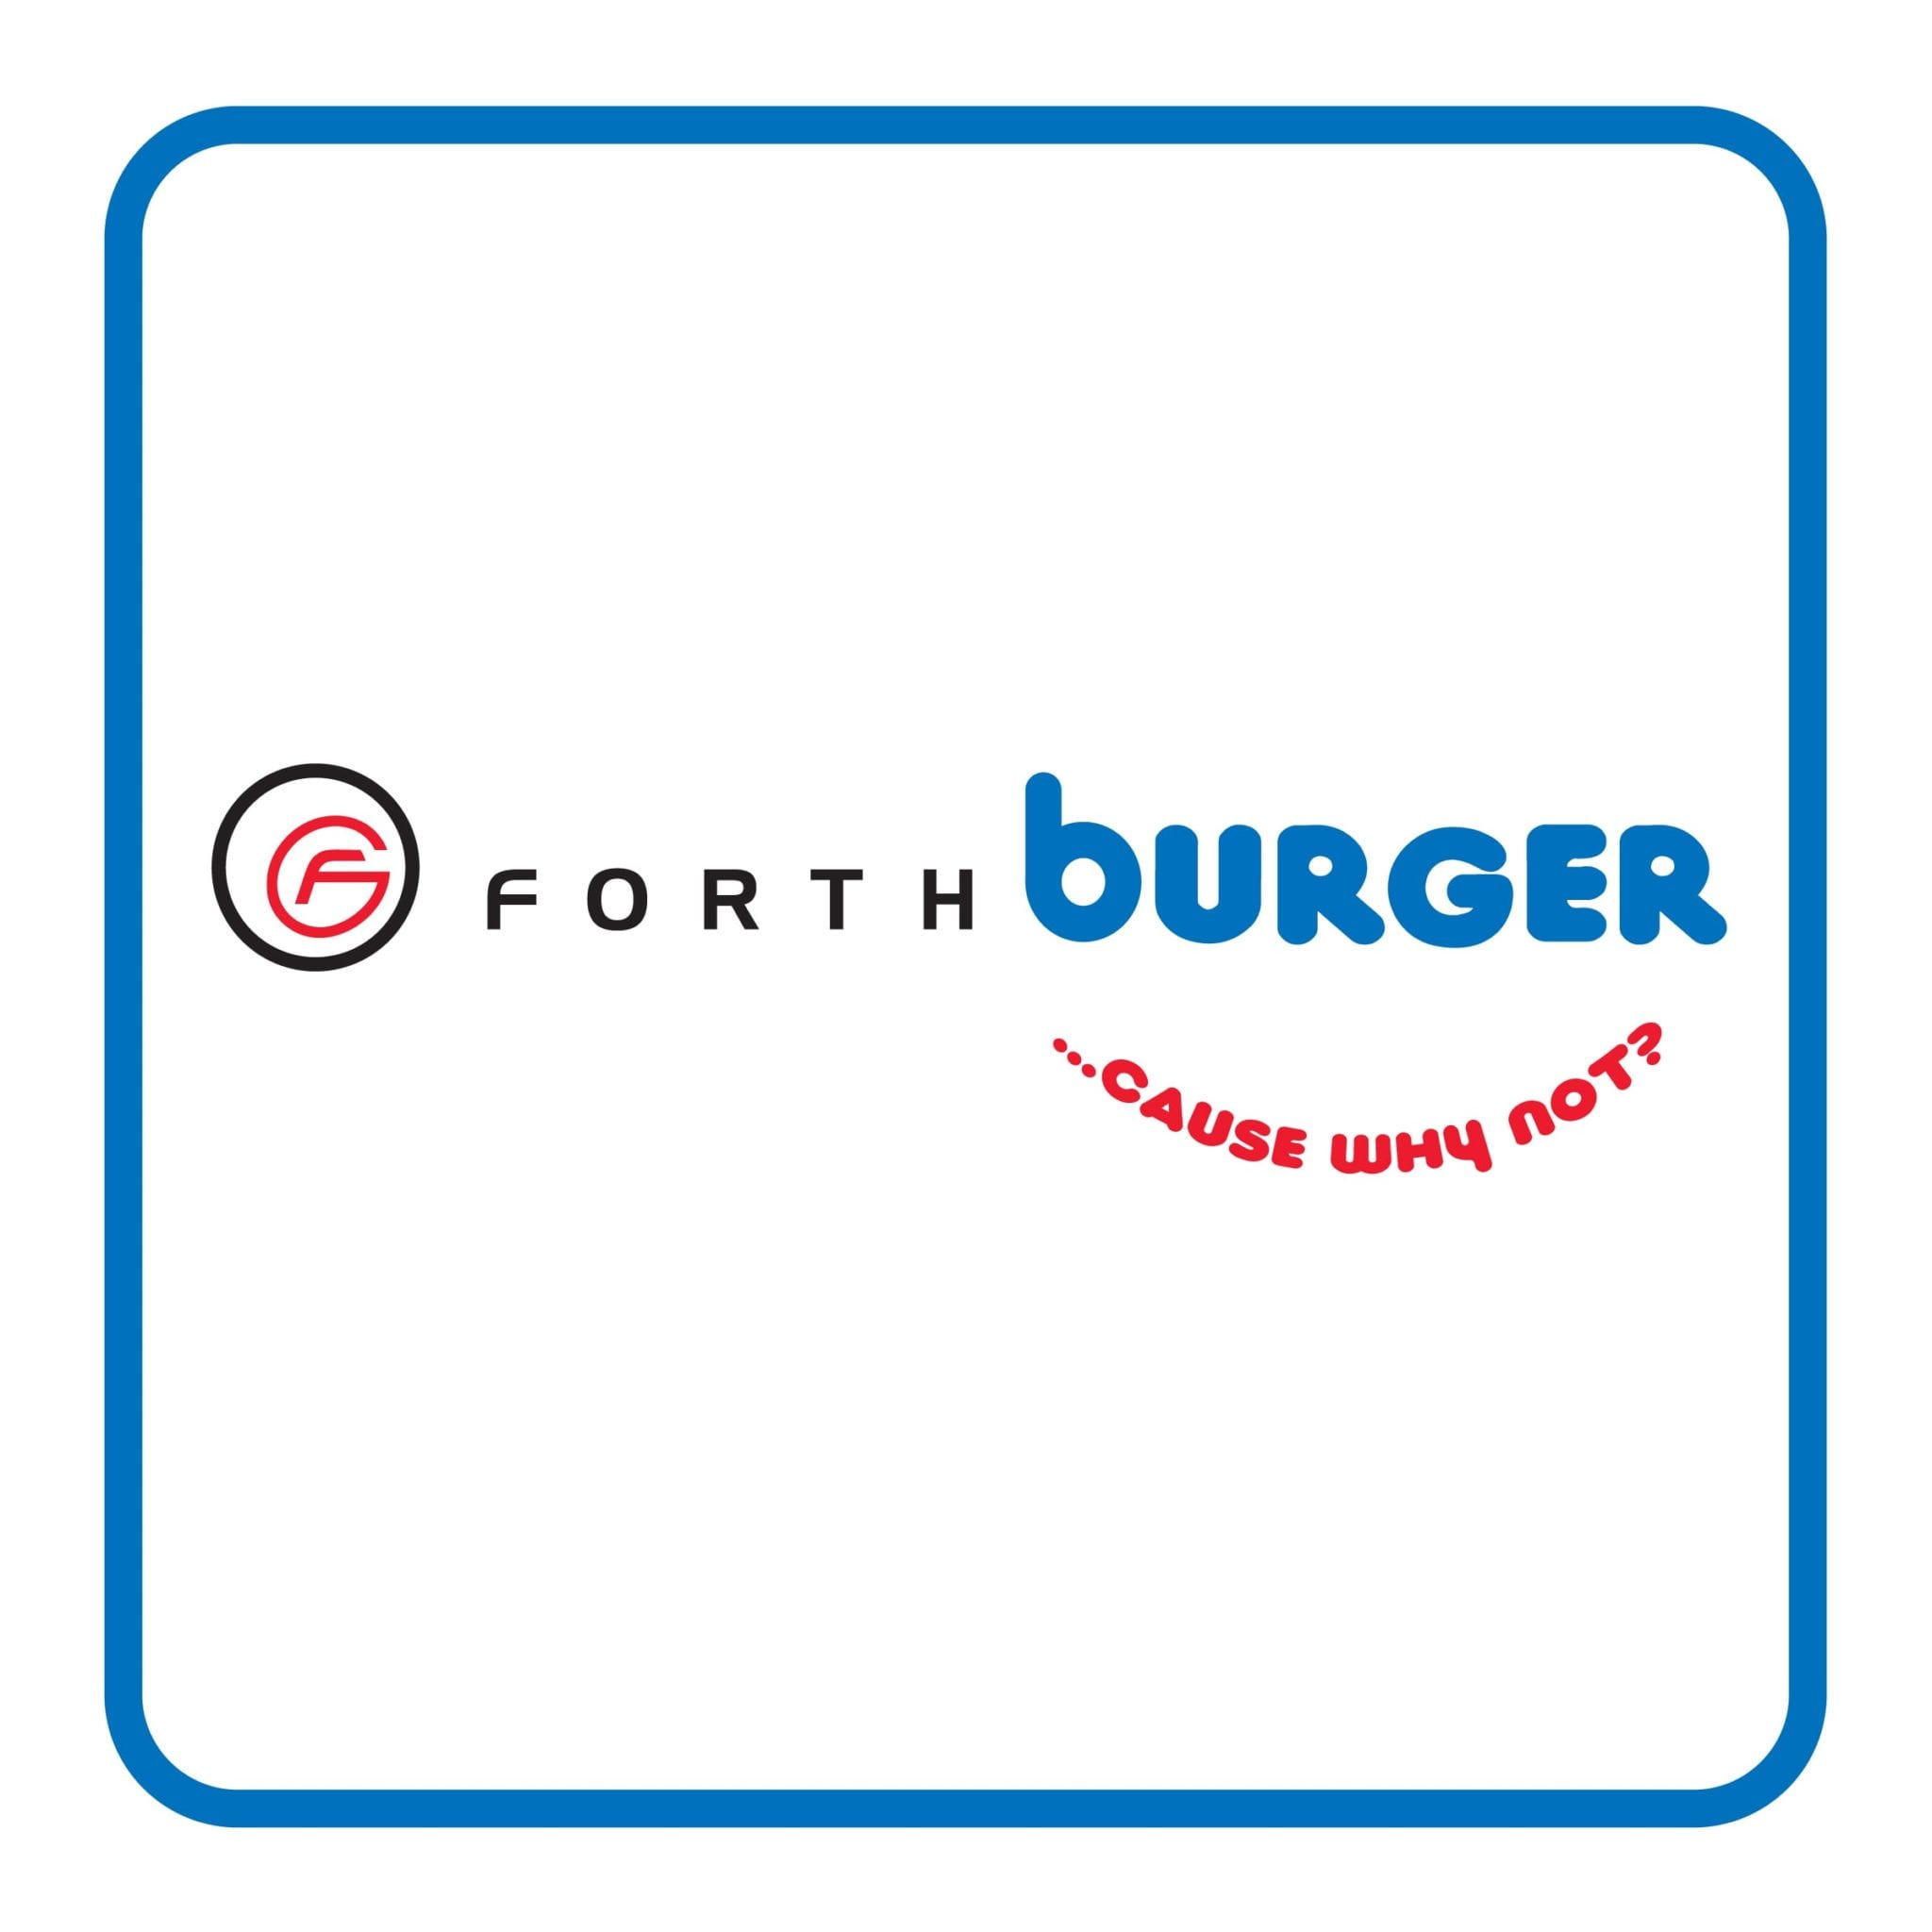 forthburger logo hop ihob market research